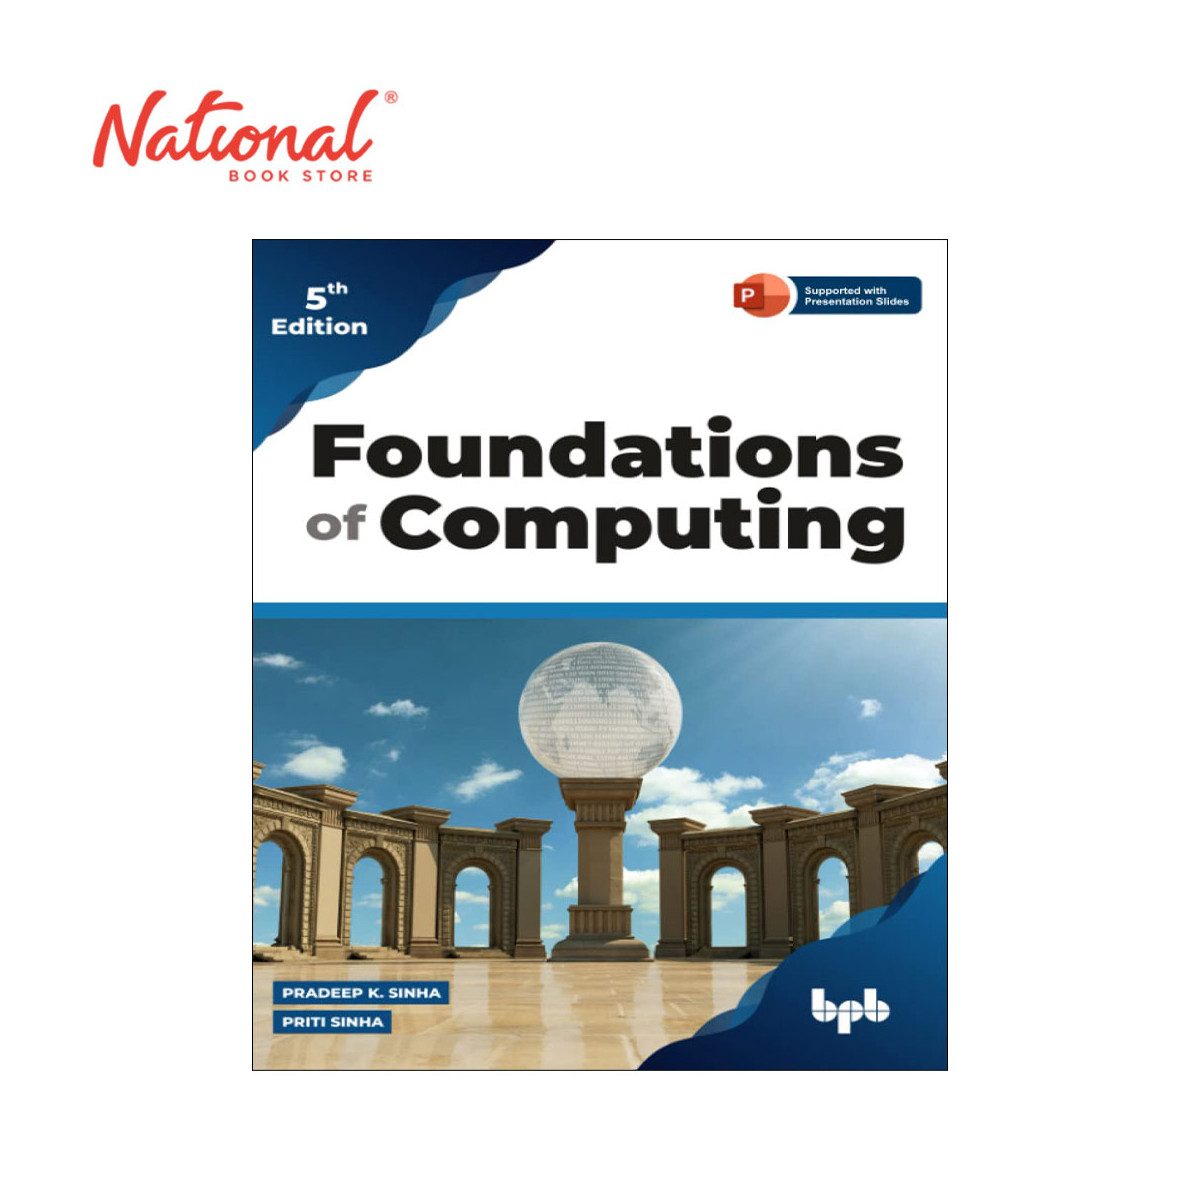 Foundations of Computing by Priti Sinha & Pradeep K. Sinha - Trade Paperback - Computer Books